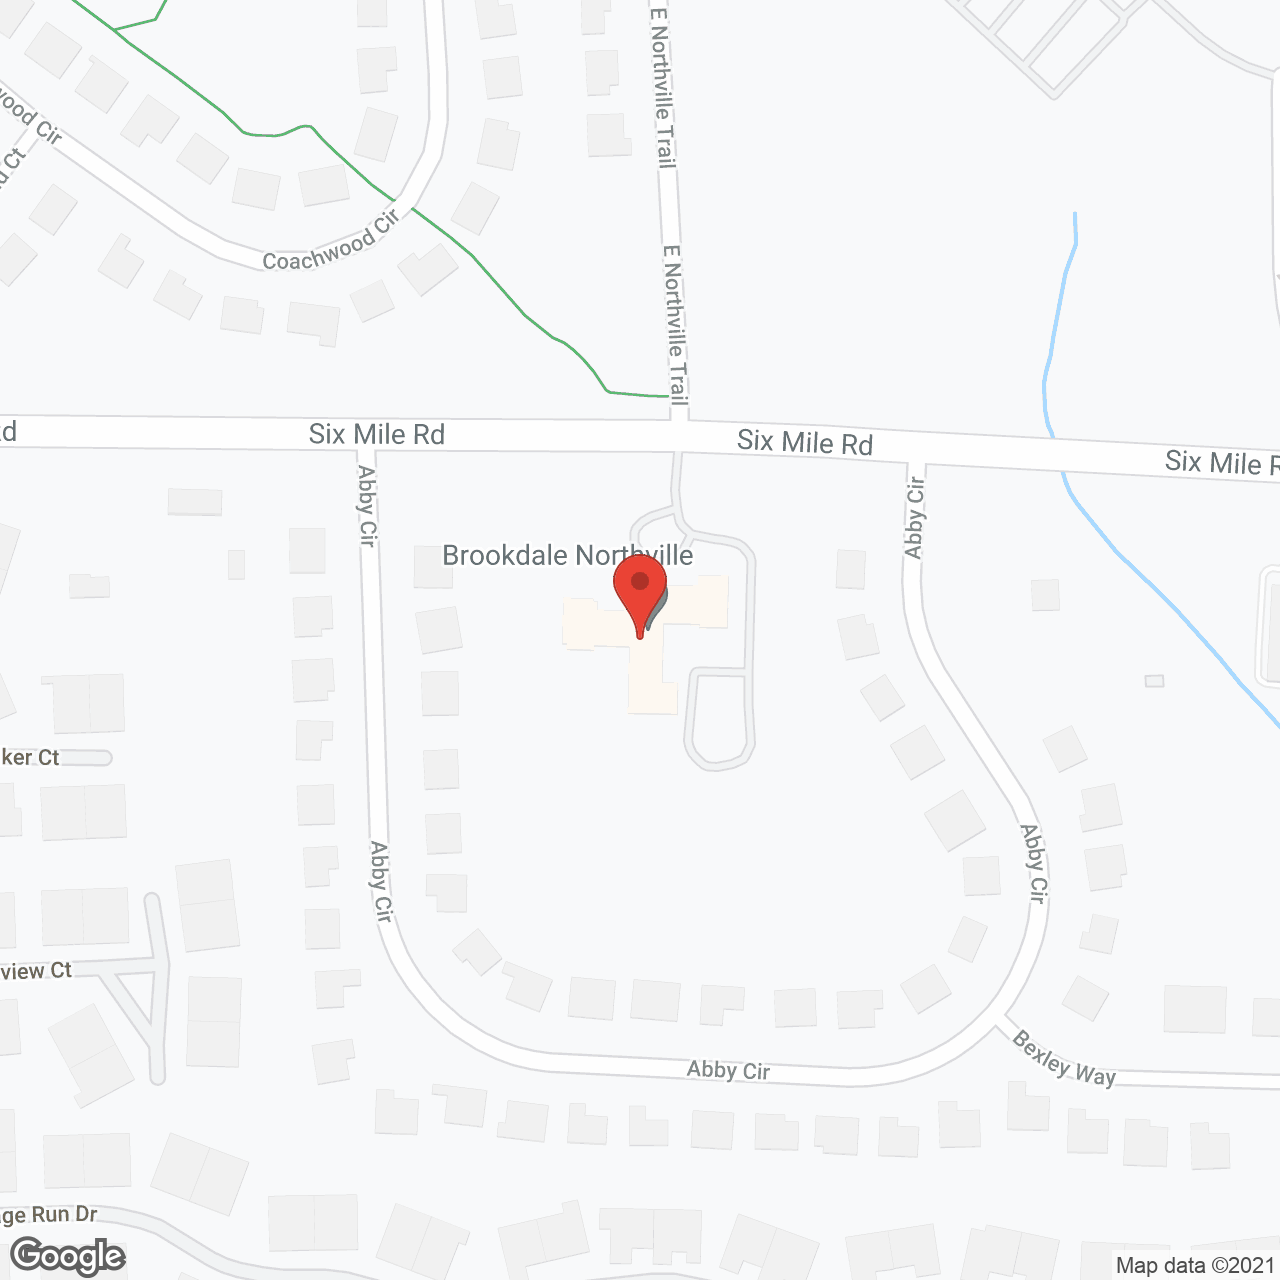 Brookdale Northville in google map